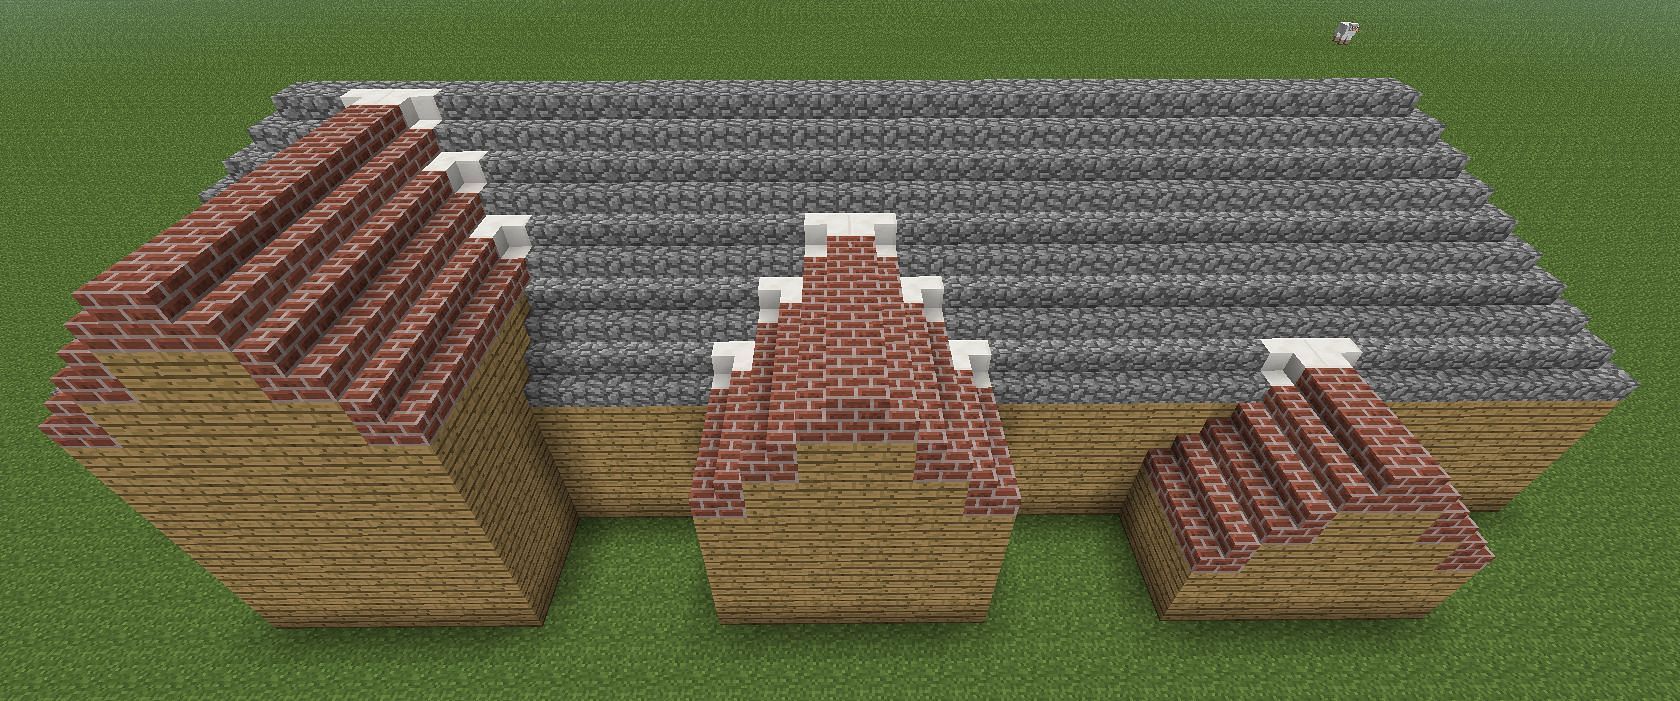 Roof design (Image via Minecraft)